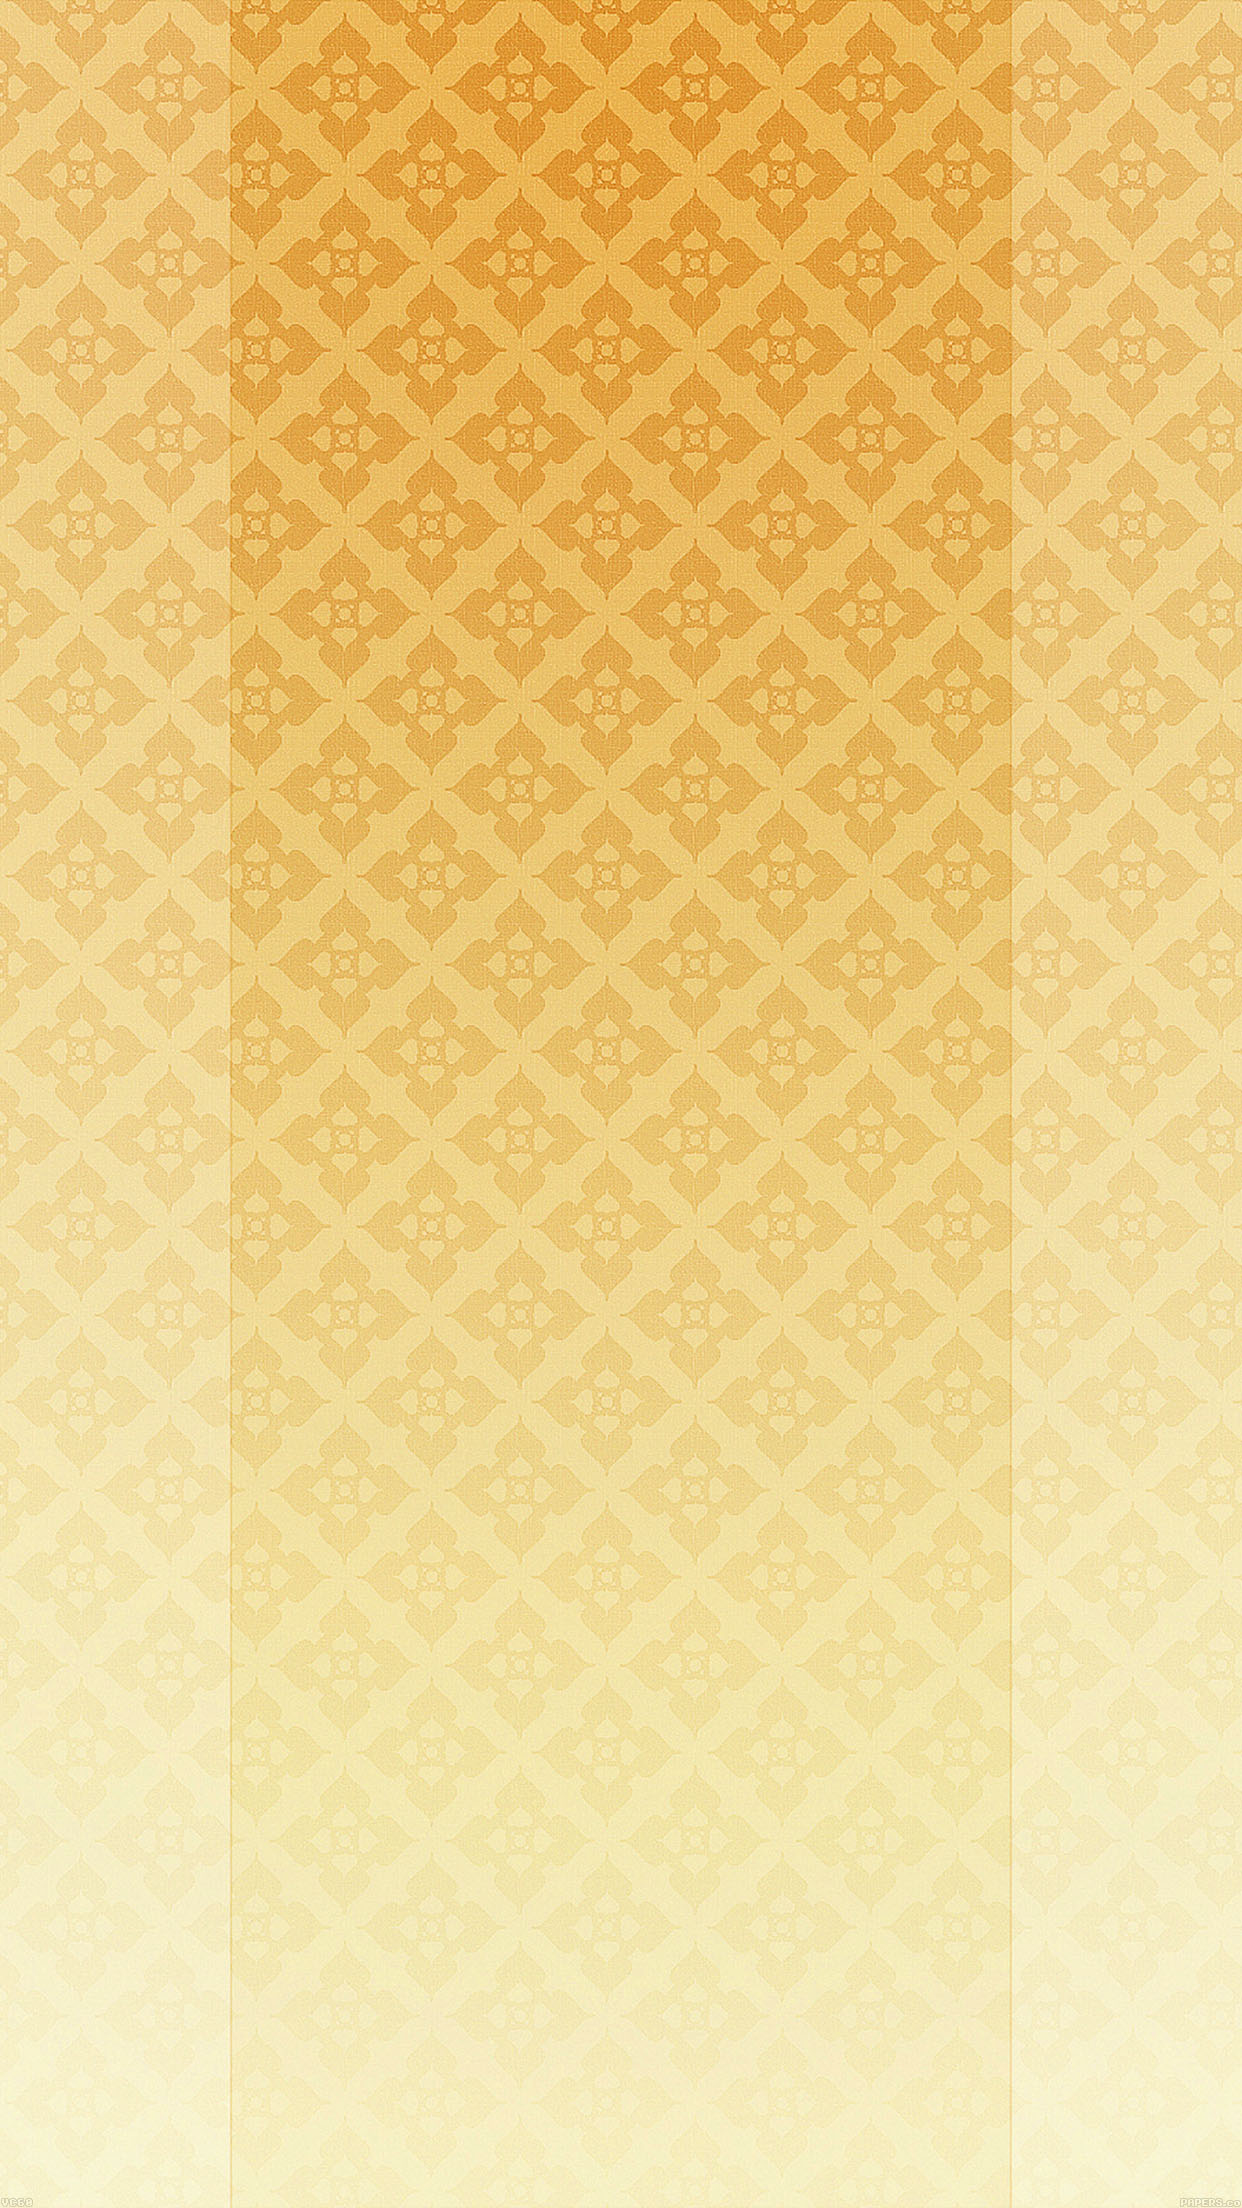 Gold Wallpaper Iphone 7 Plus - HD Wallpaper 